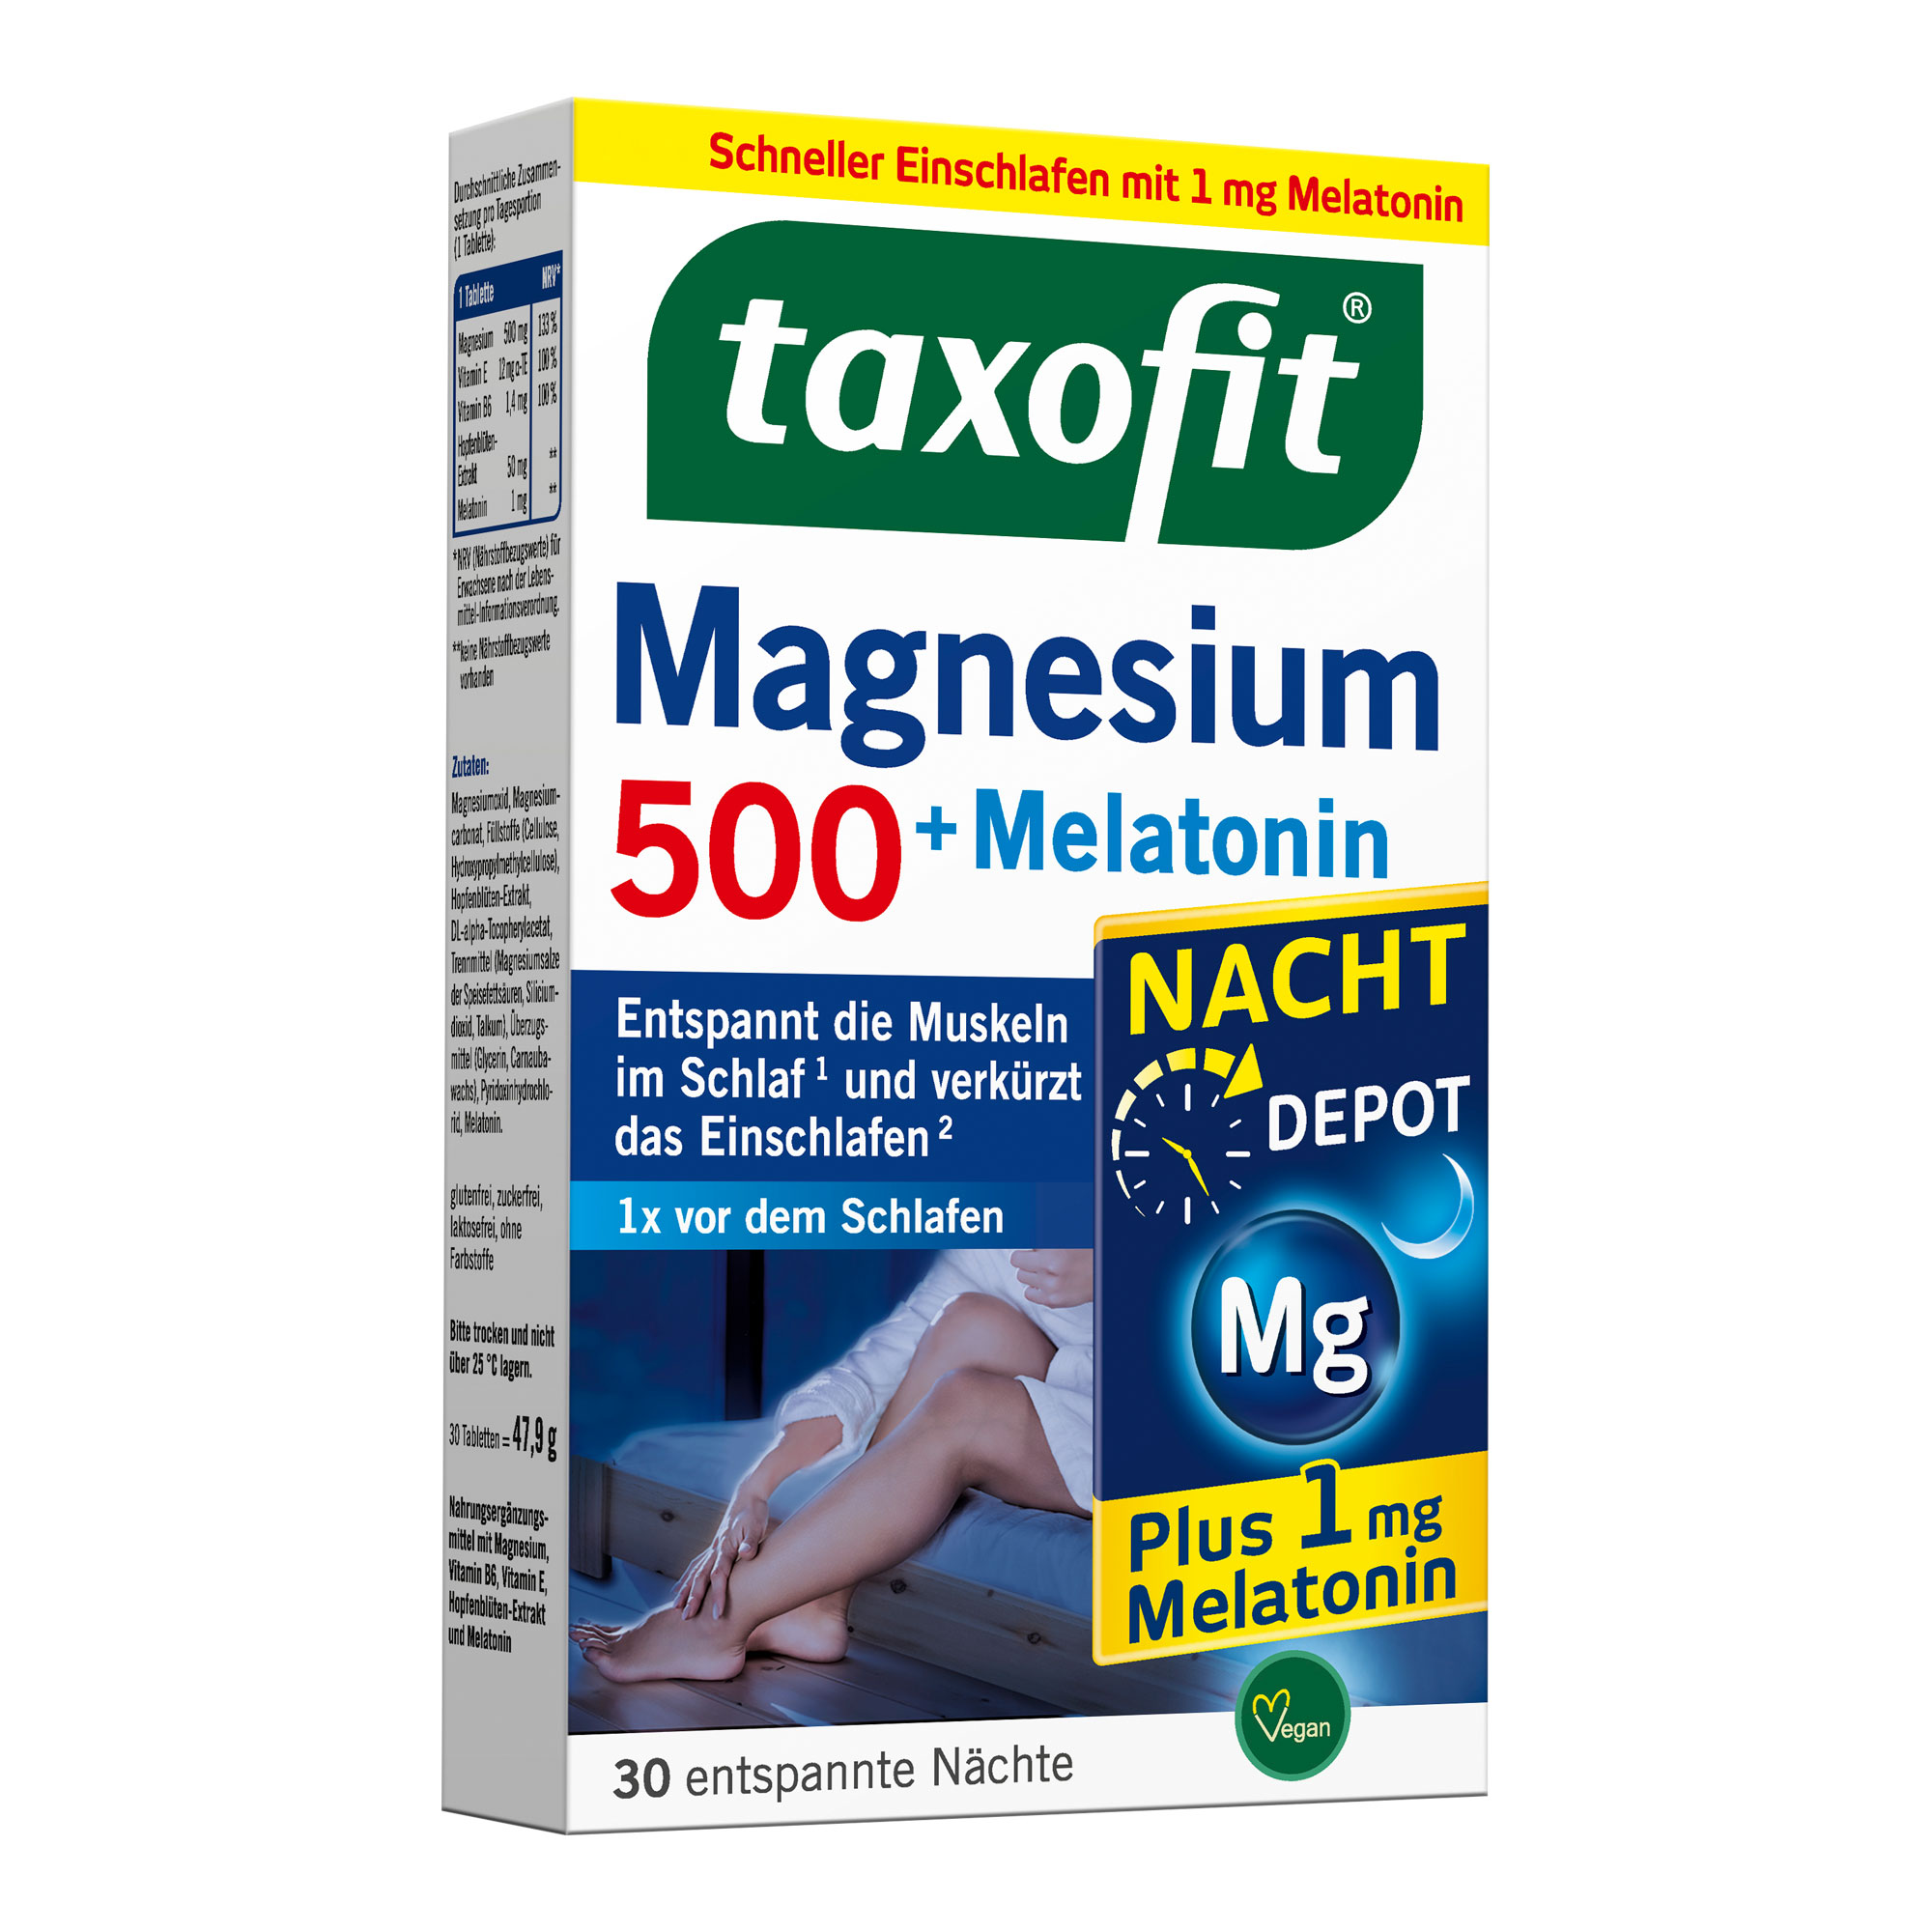 Nahrungsergänzungsmittel mit Magnesium, Vitamin B6, Vitamin E, Hopfenblüten-Extrakt und Melatonin.